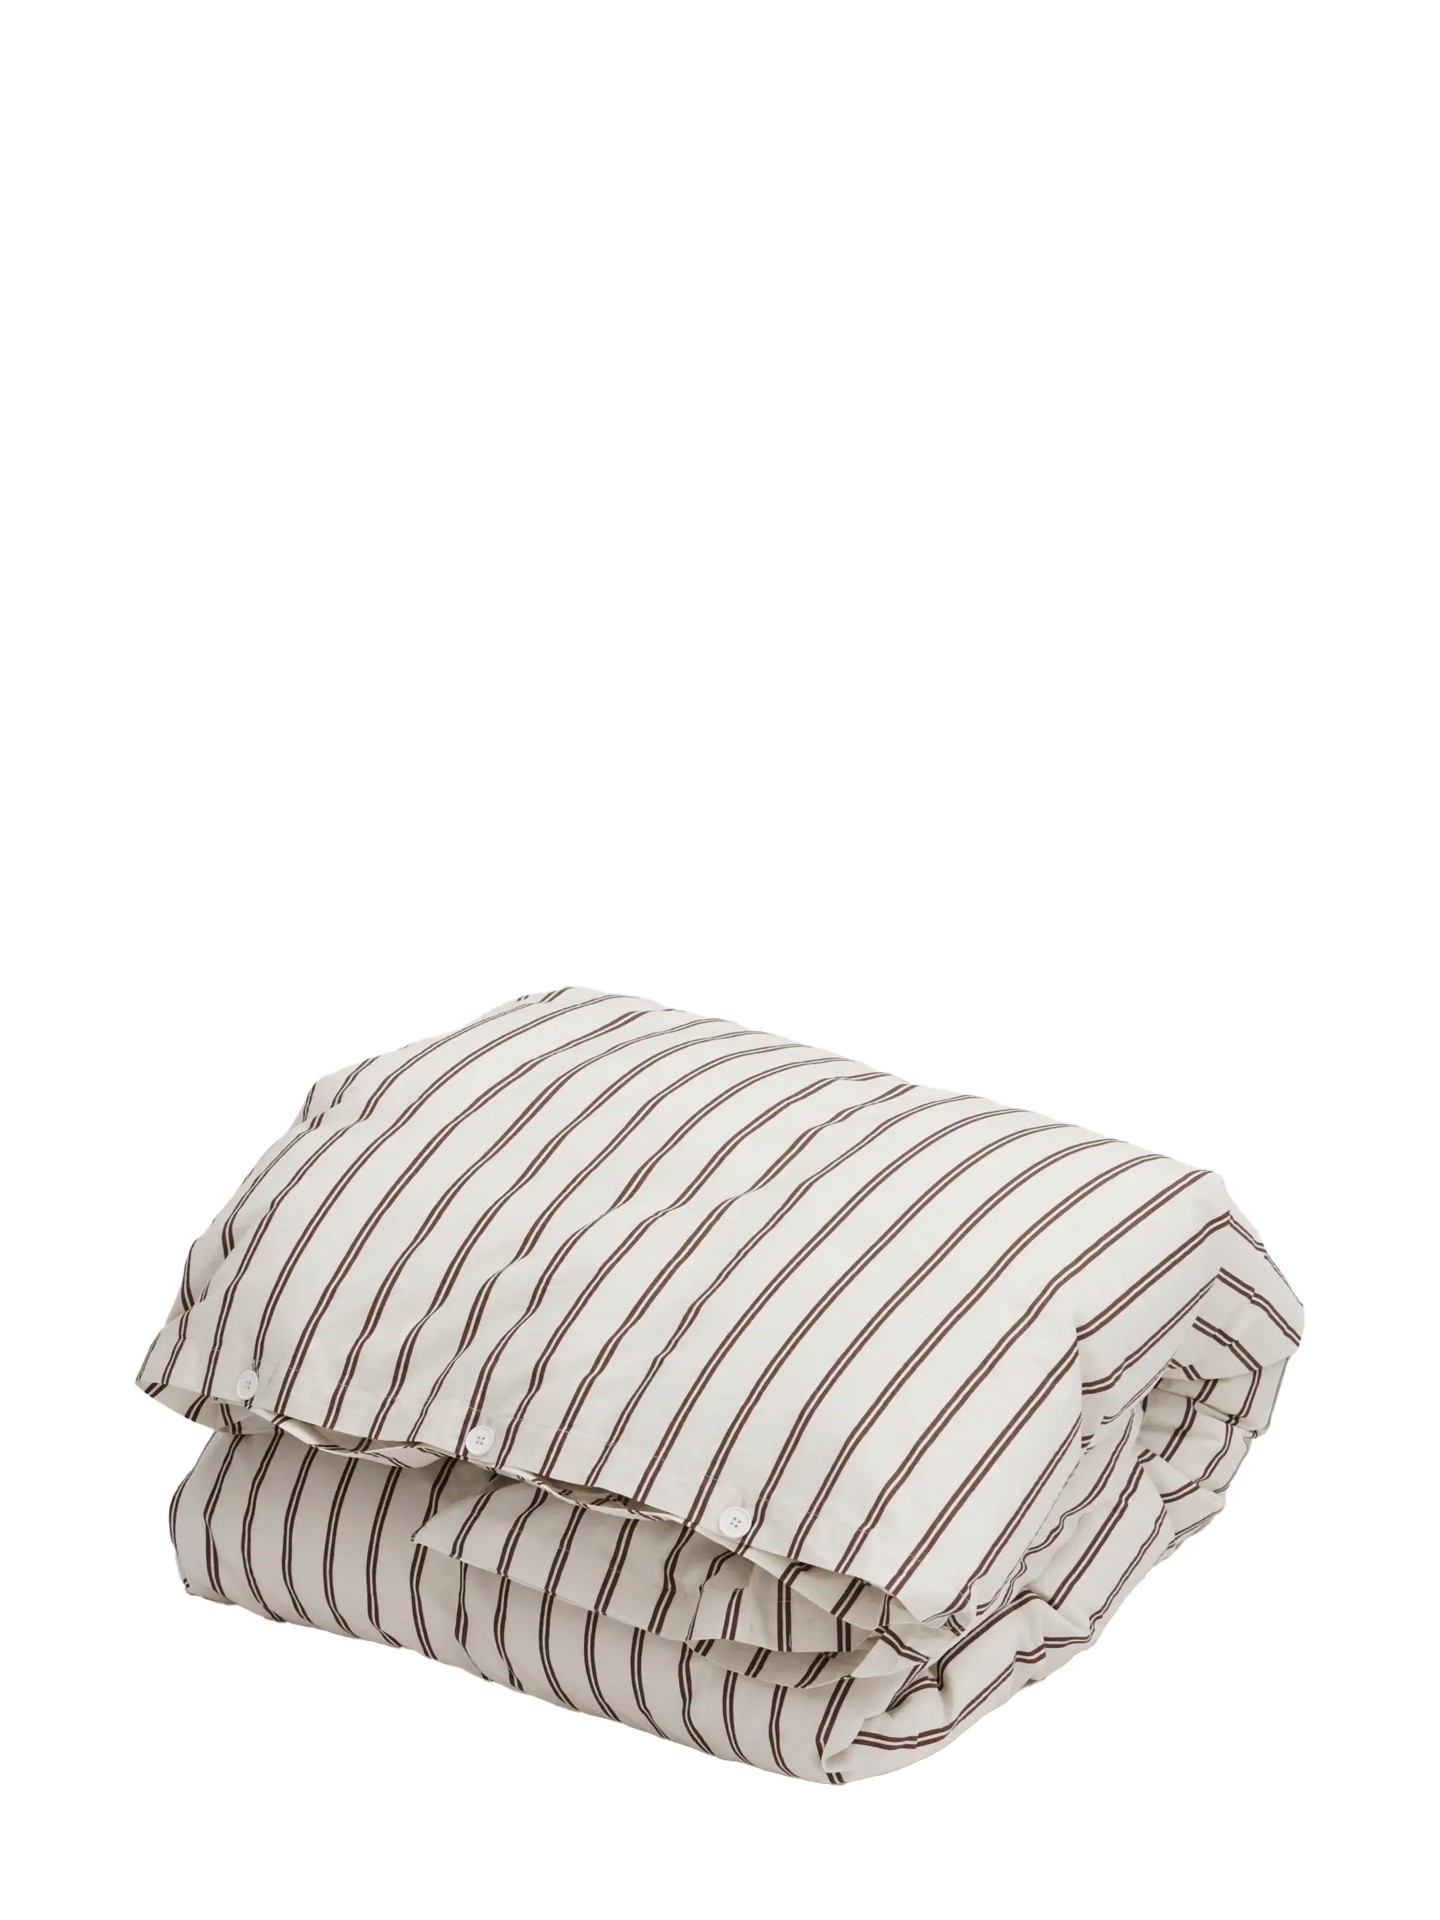 Percale Single Duvet Cover, Hopper stripes